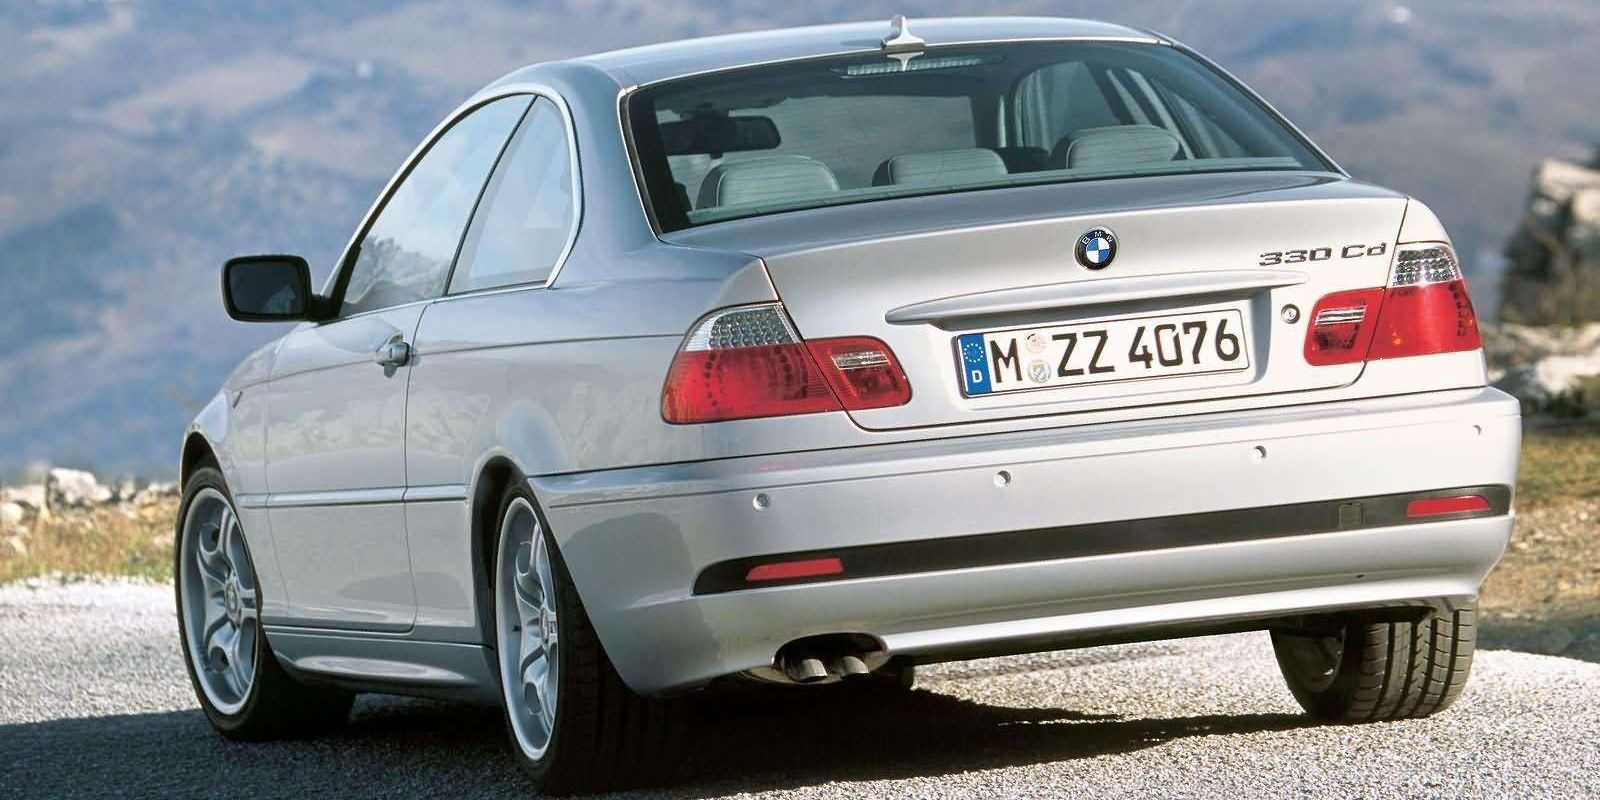 BMW 330Cd 2004